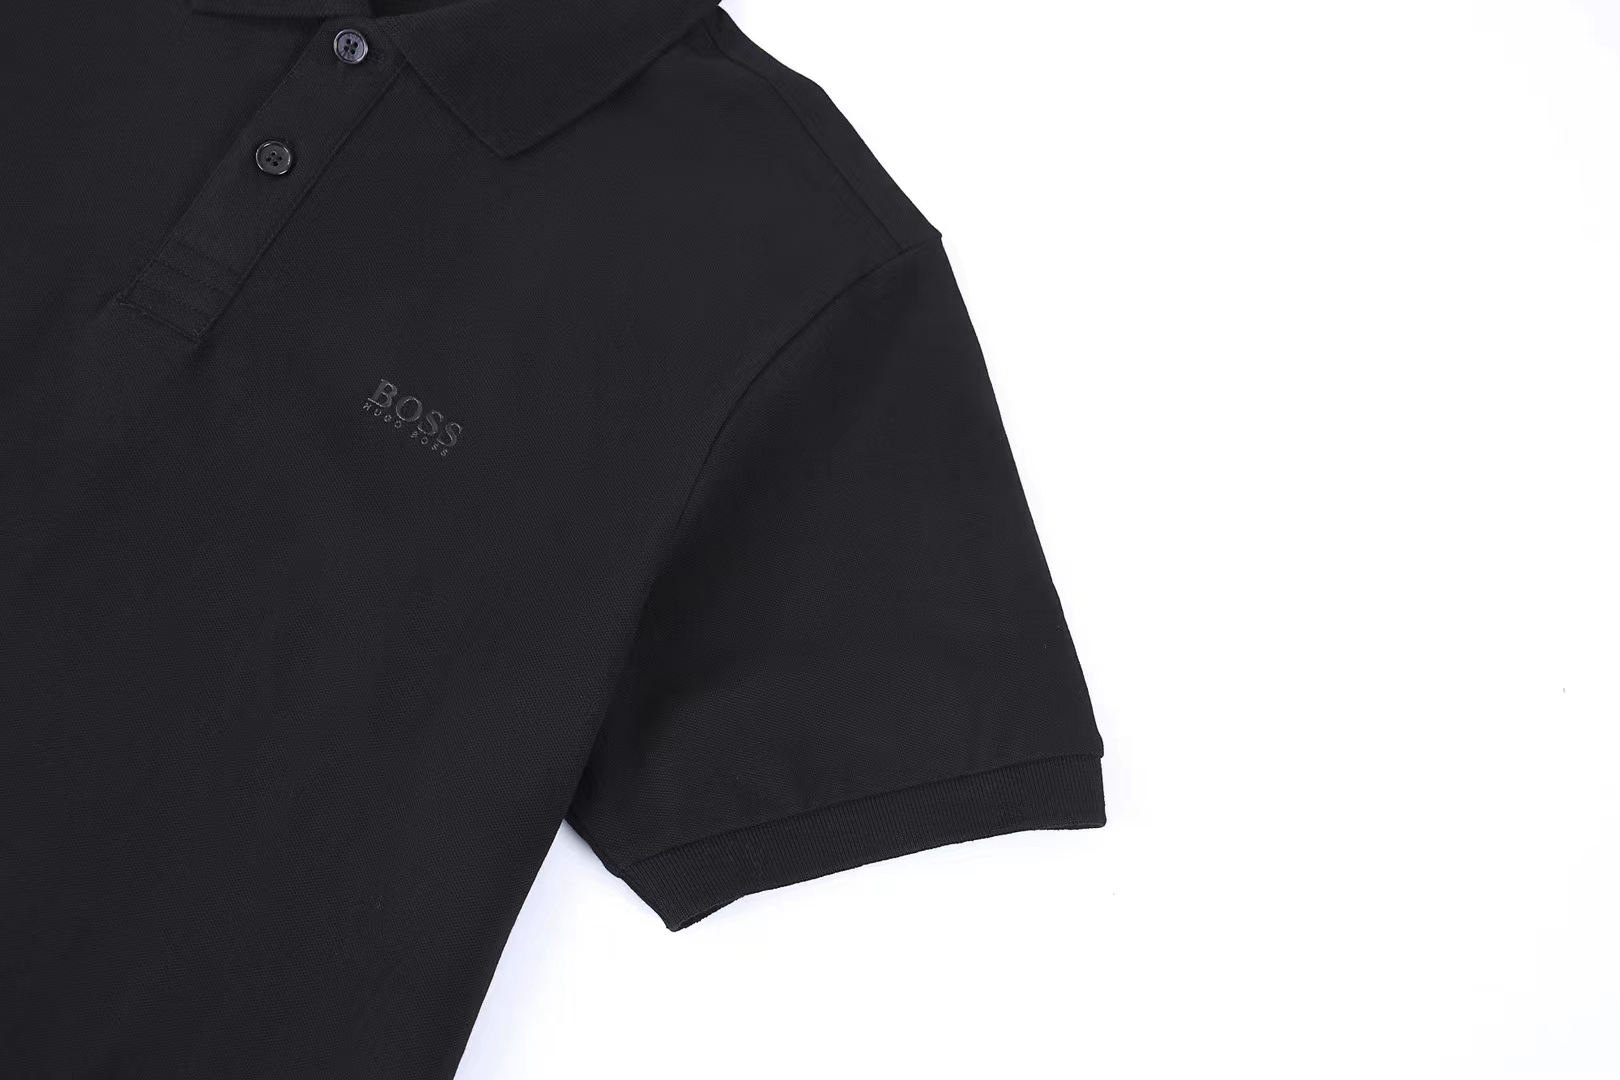 Hugo Boss Short Sleeve Polo Shirt Unisex # 264944, cheap Hugo Boss T Shirts, only $32!